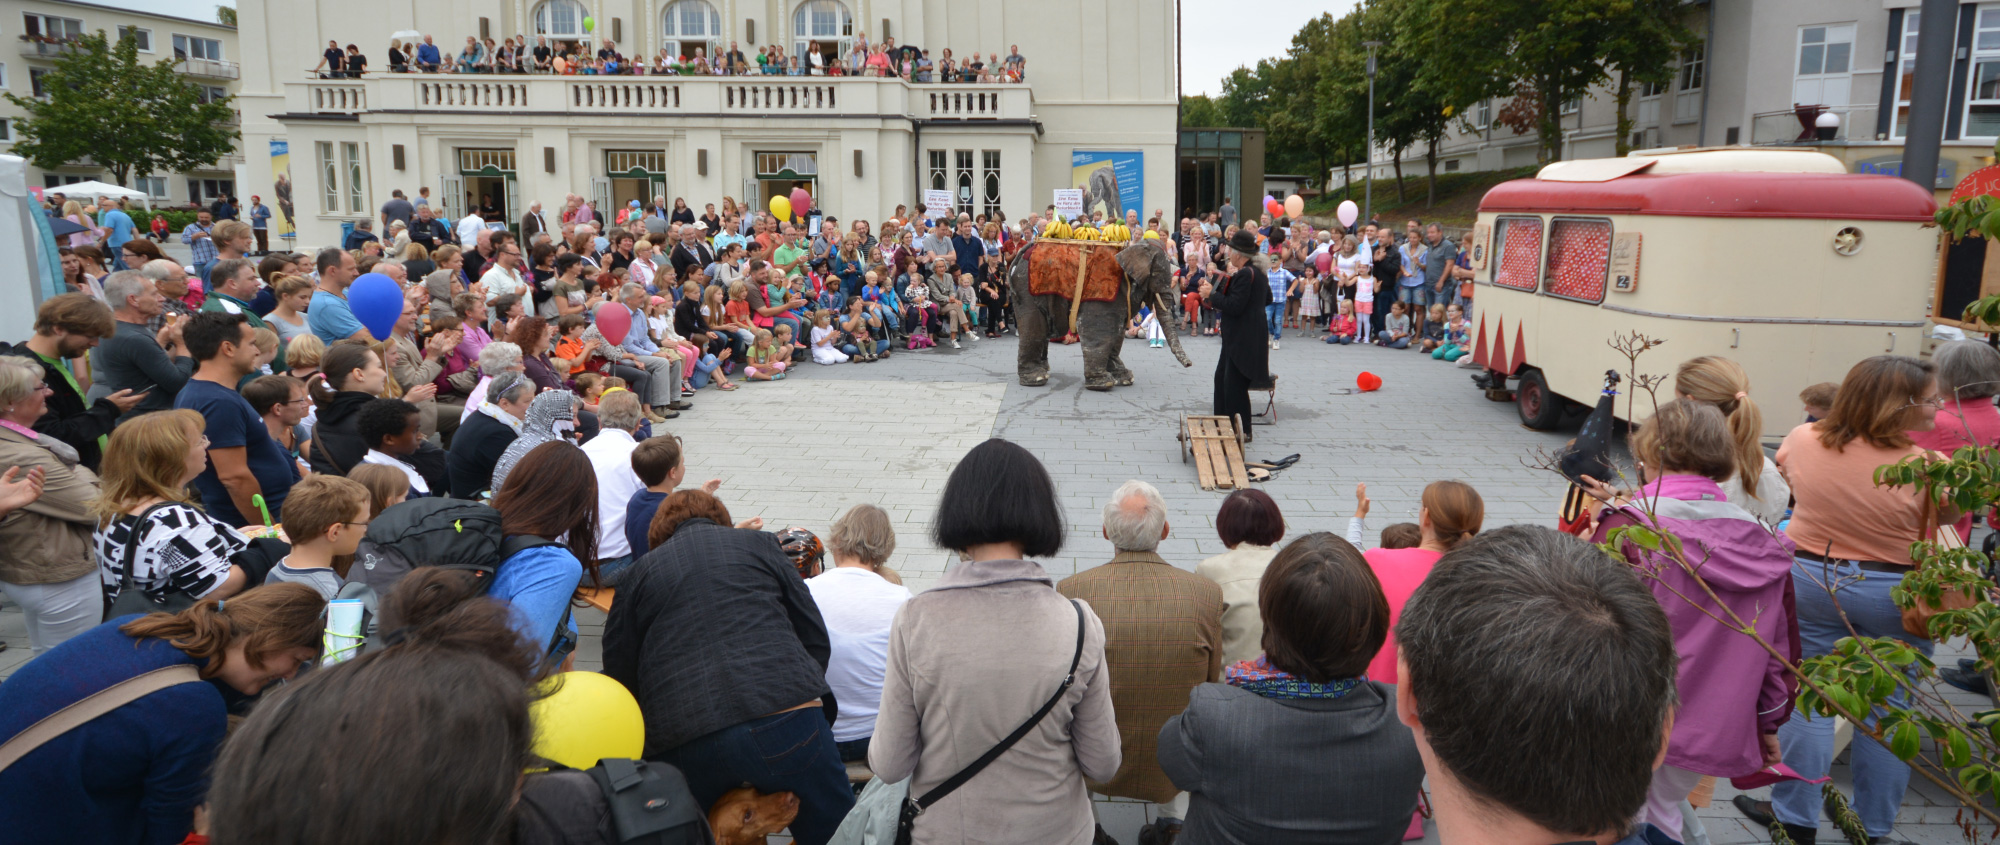 Kulturbund der Lessingstadt Wolfenbüttel e.V. - Theaterfestival vor dem Lessingtheater